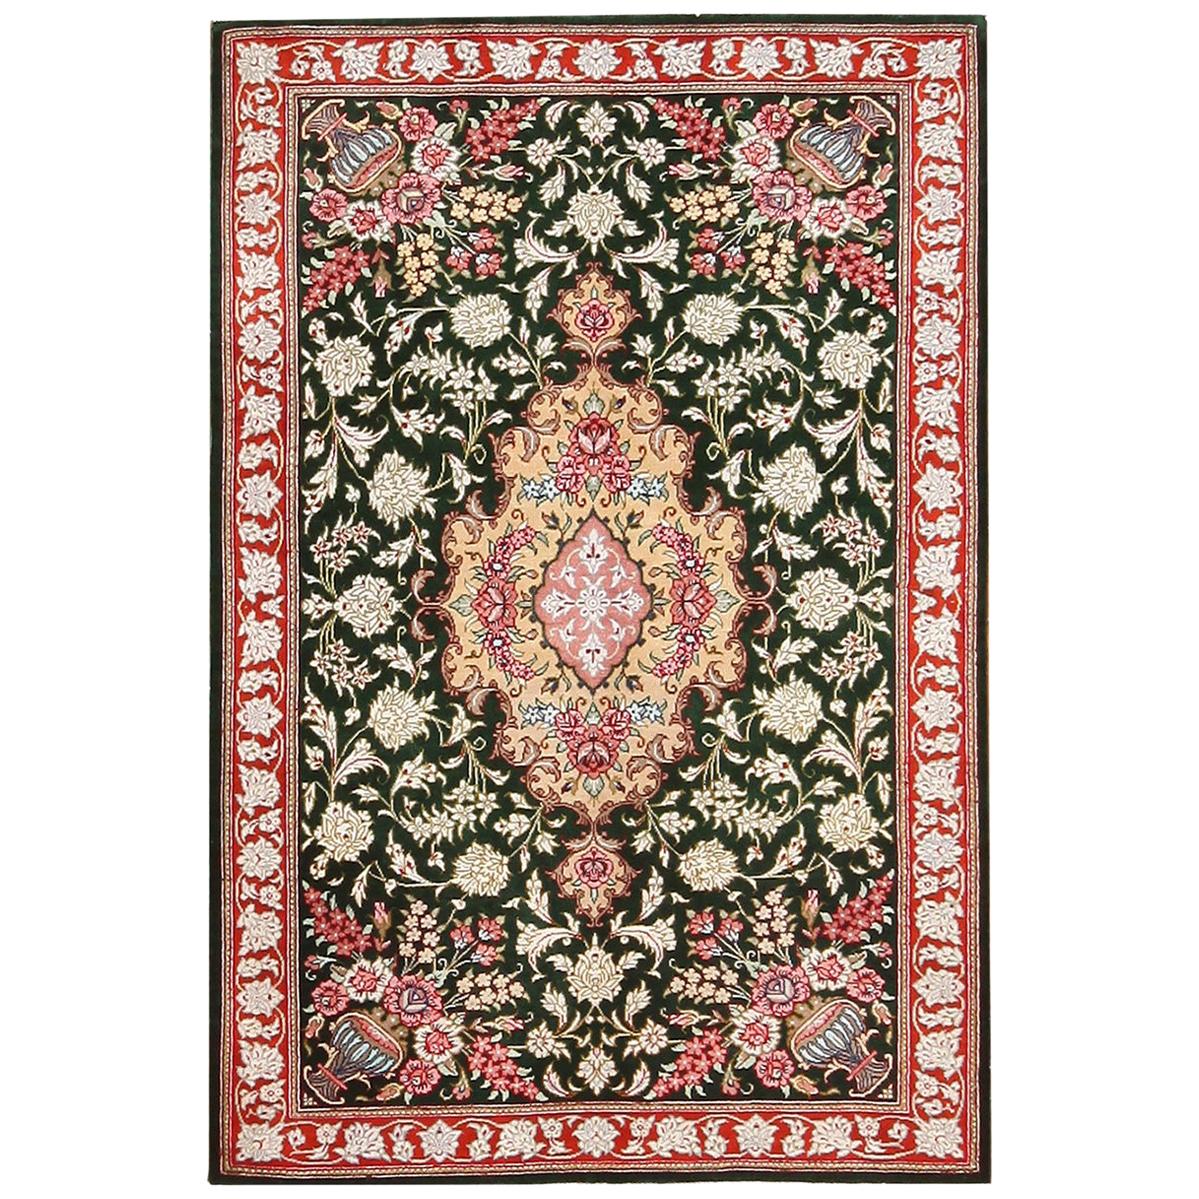 Vintage Persian Silk Qum Rug. 2 ft x 3 ft